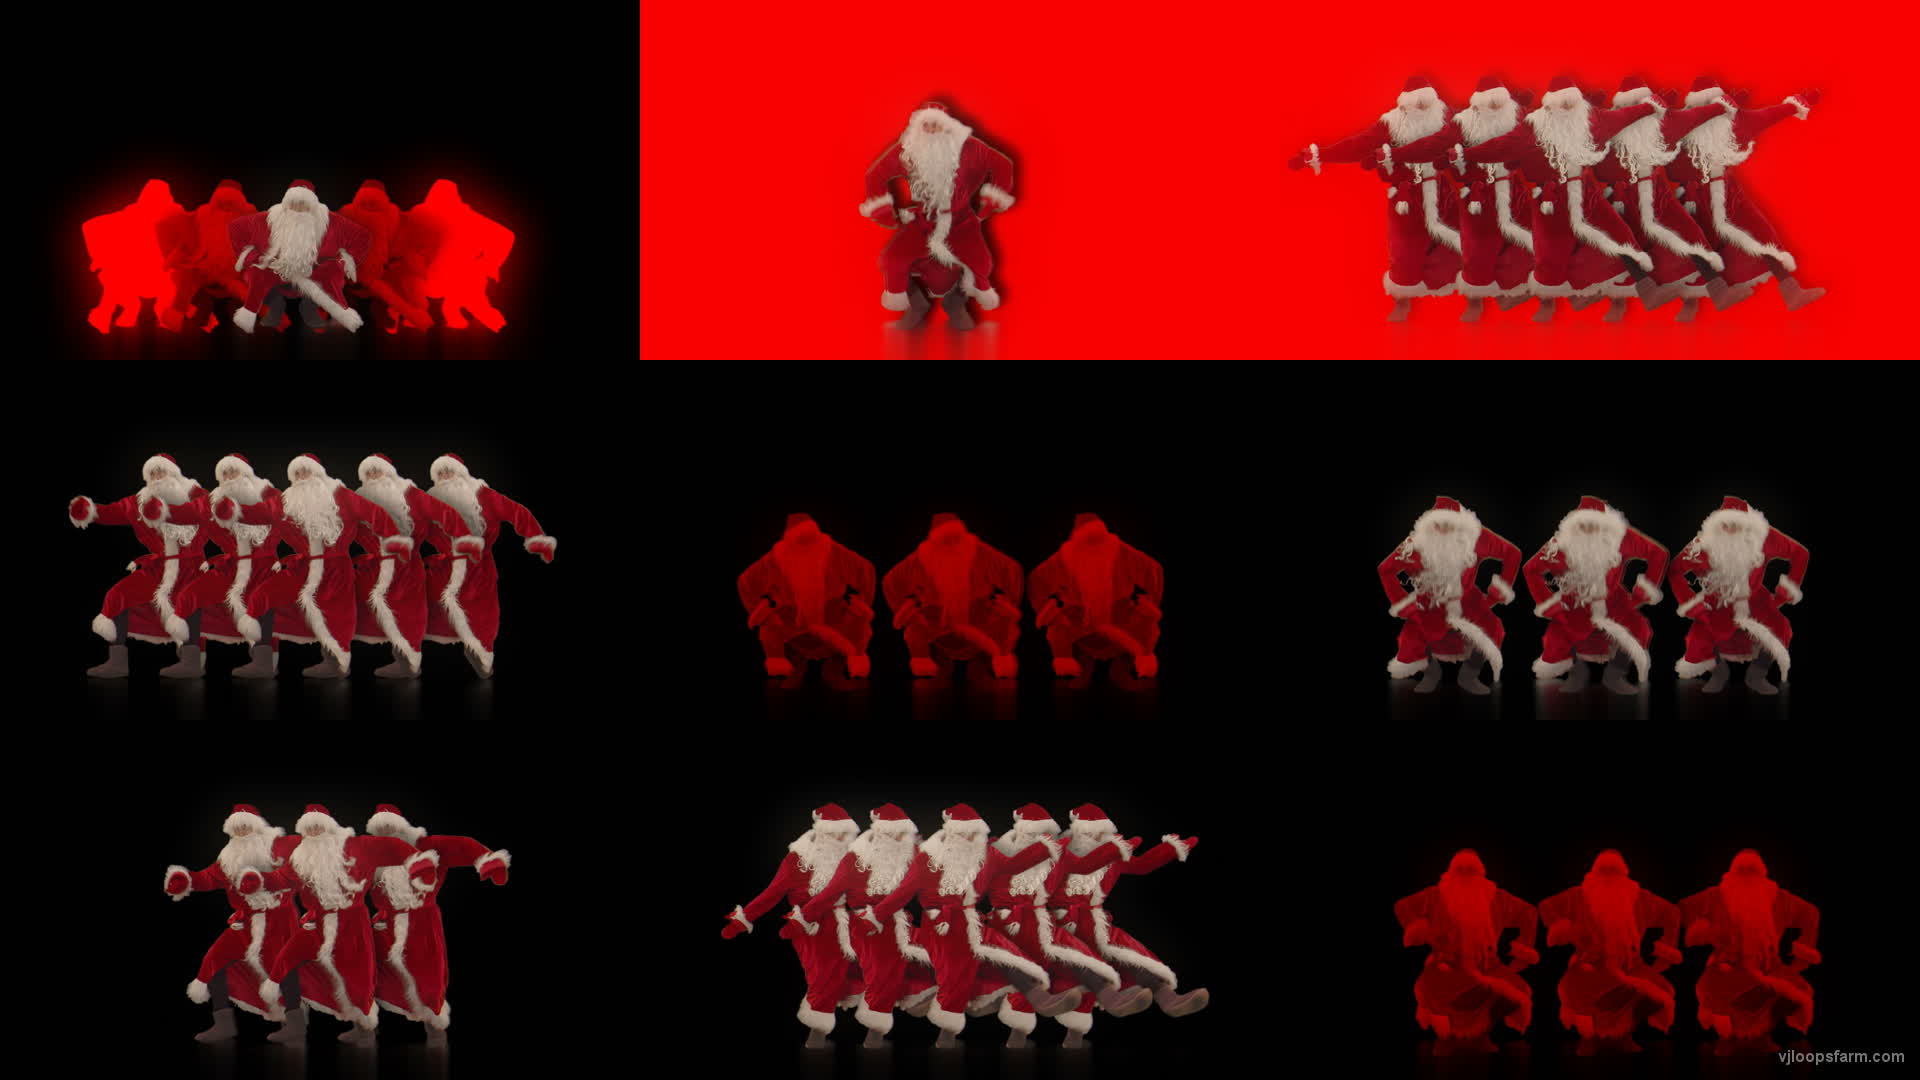 Dancing Santa Claus Sliding body to the Rave Strobbing Effect – VJ Art 4K Video Footage